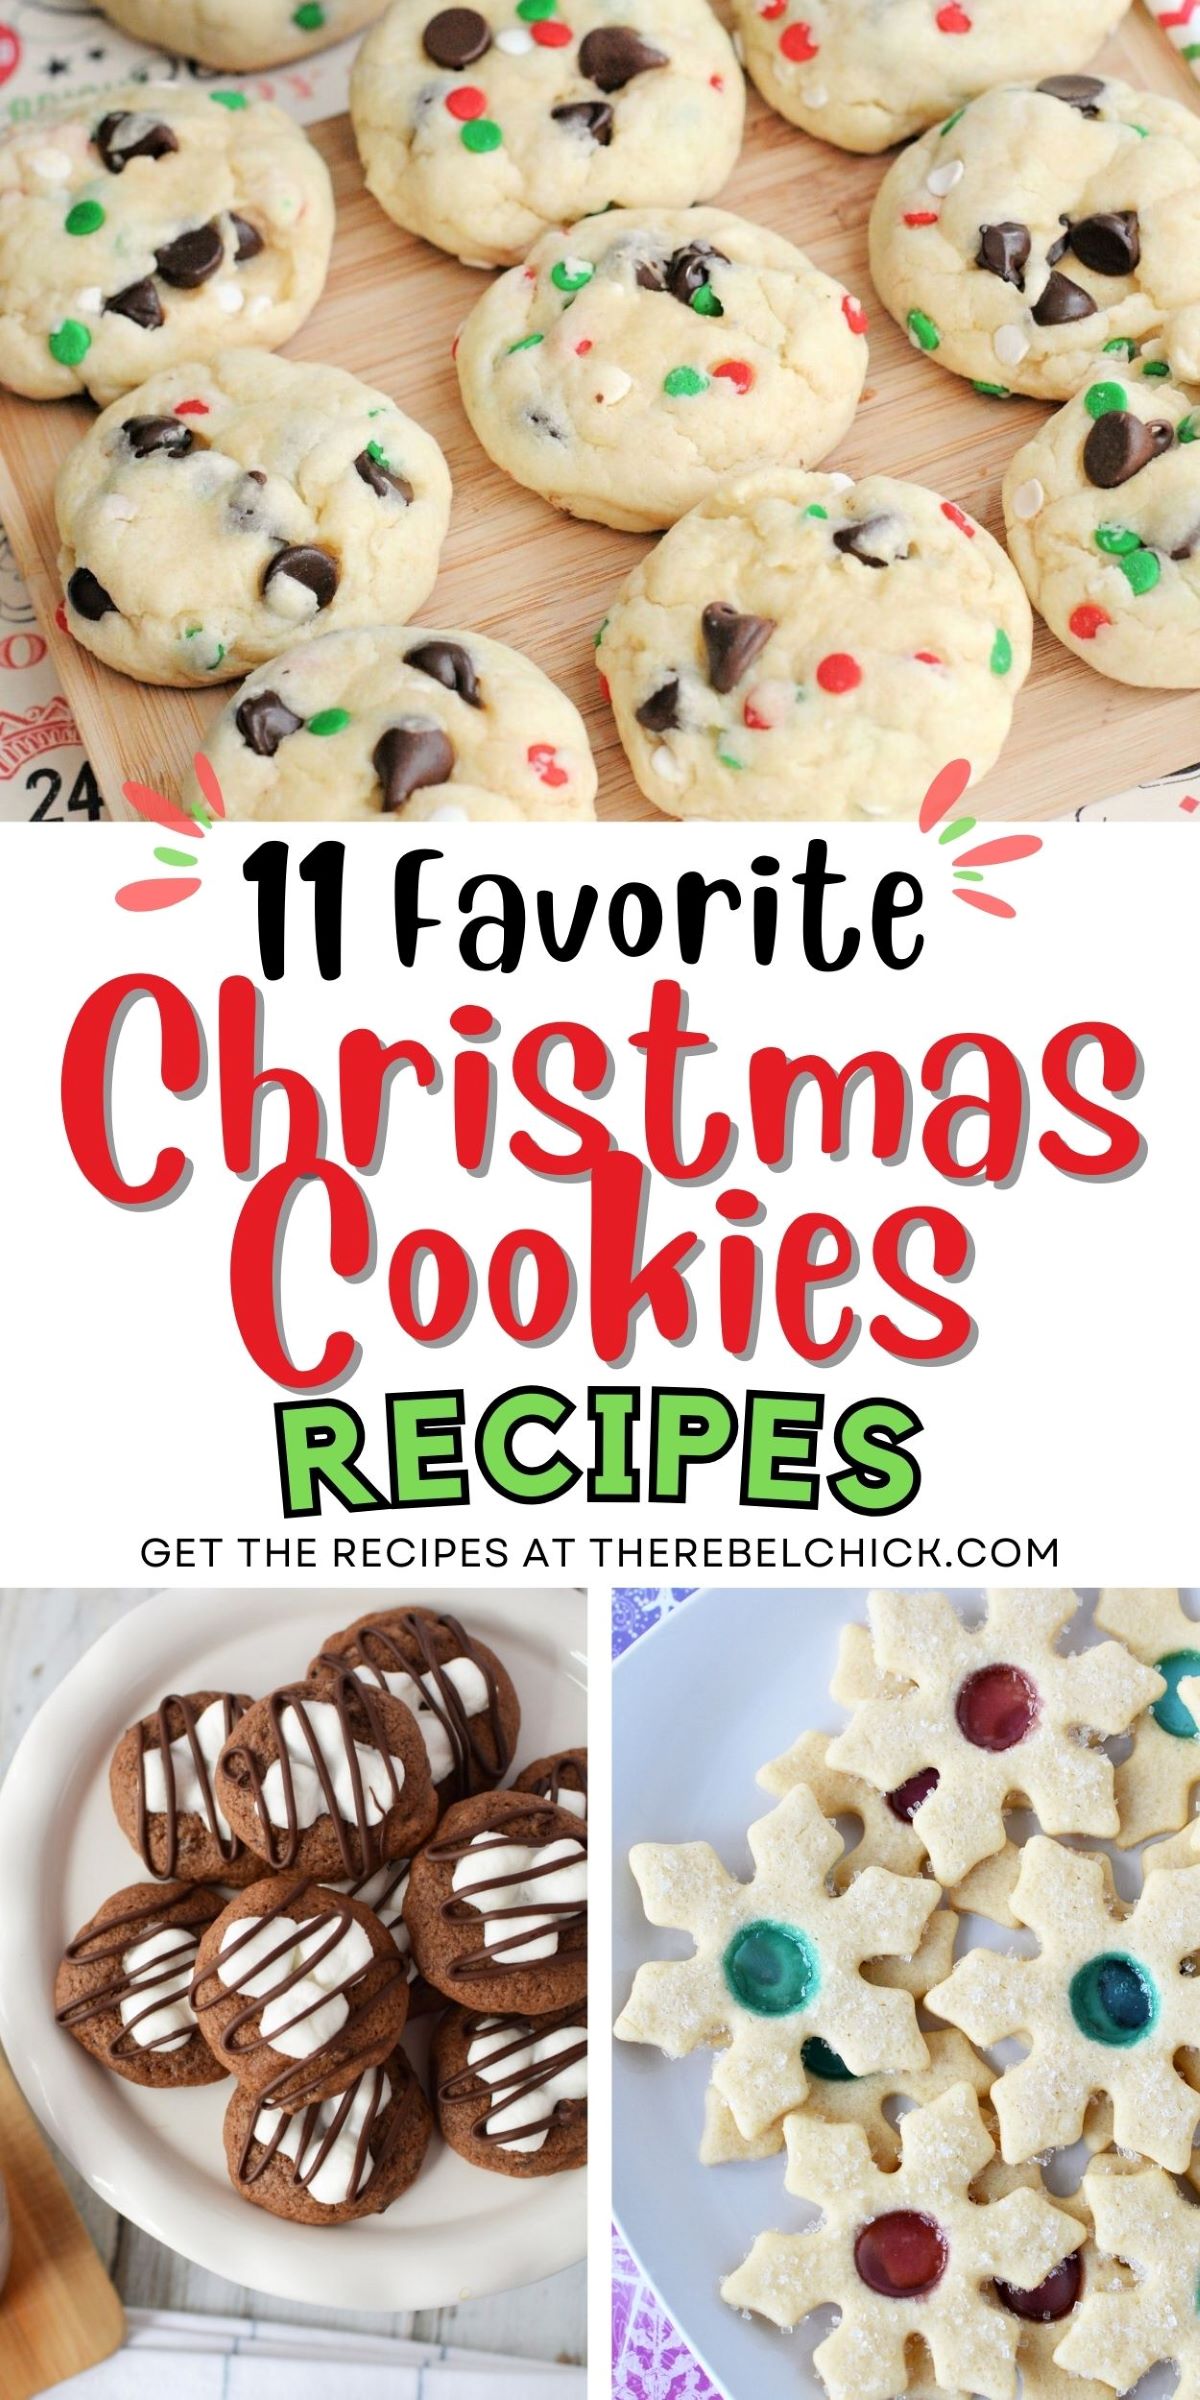 11 Favorite Christmas Cookies Recipes